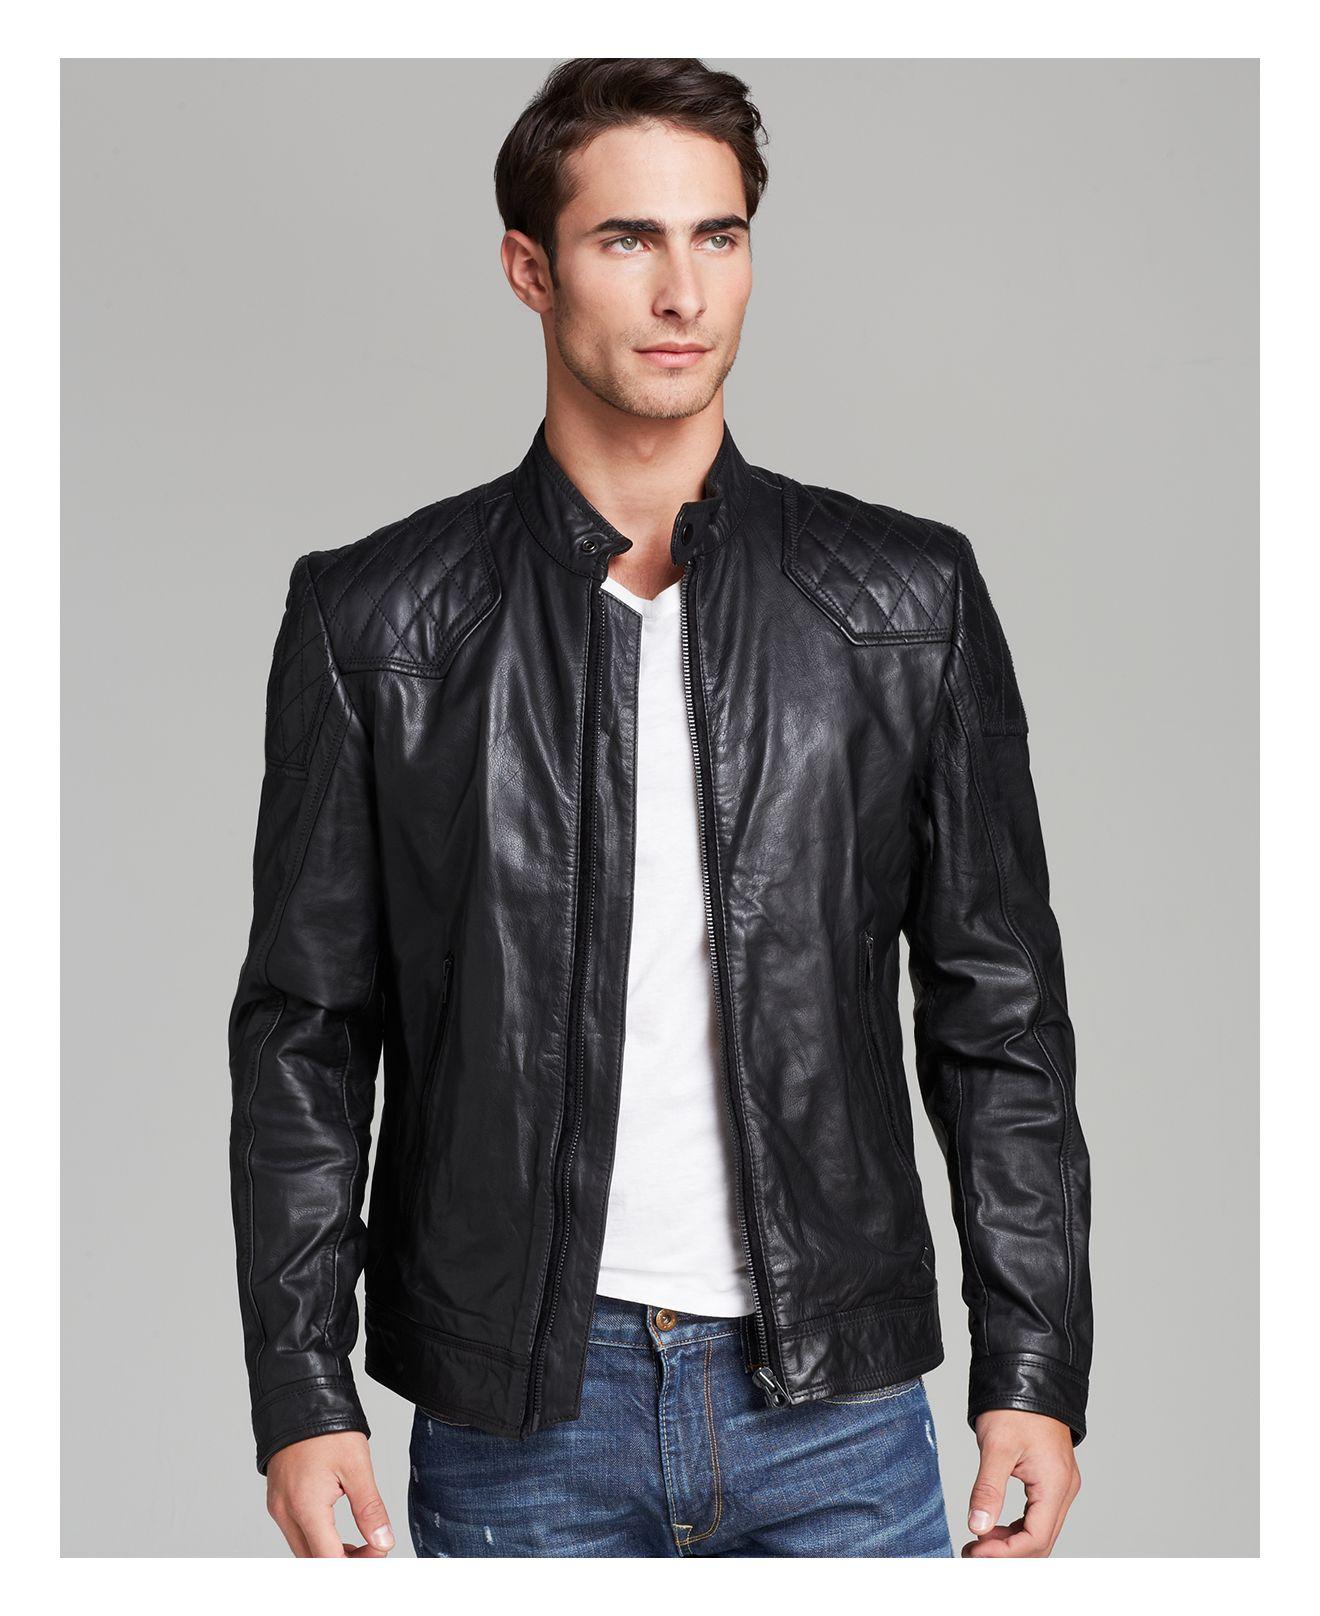 DIESEL Laleta Leather Jacket in Black for Men - Lyst